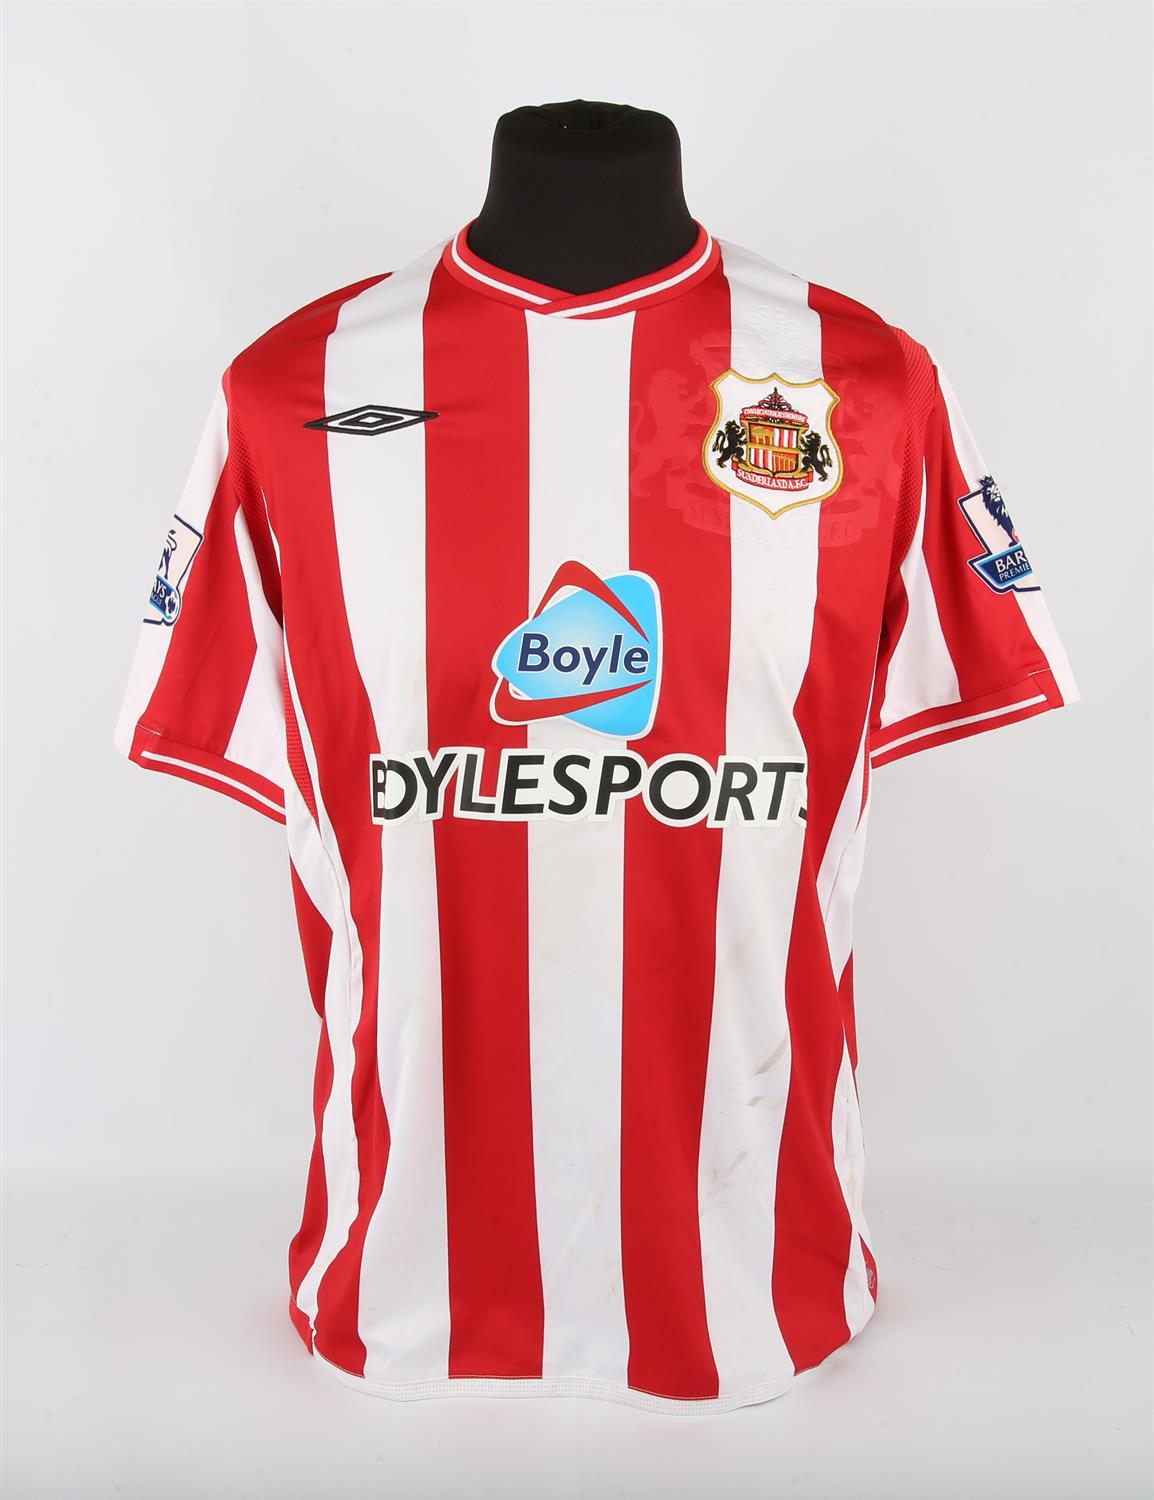 Sunderland A.F.C. Football club, Paulo Da Silva (No.22) 2009-2010 Season shirt, S/S. - Image 2 of 2